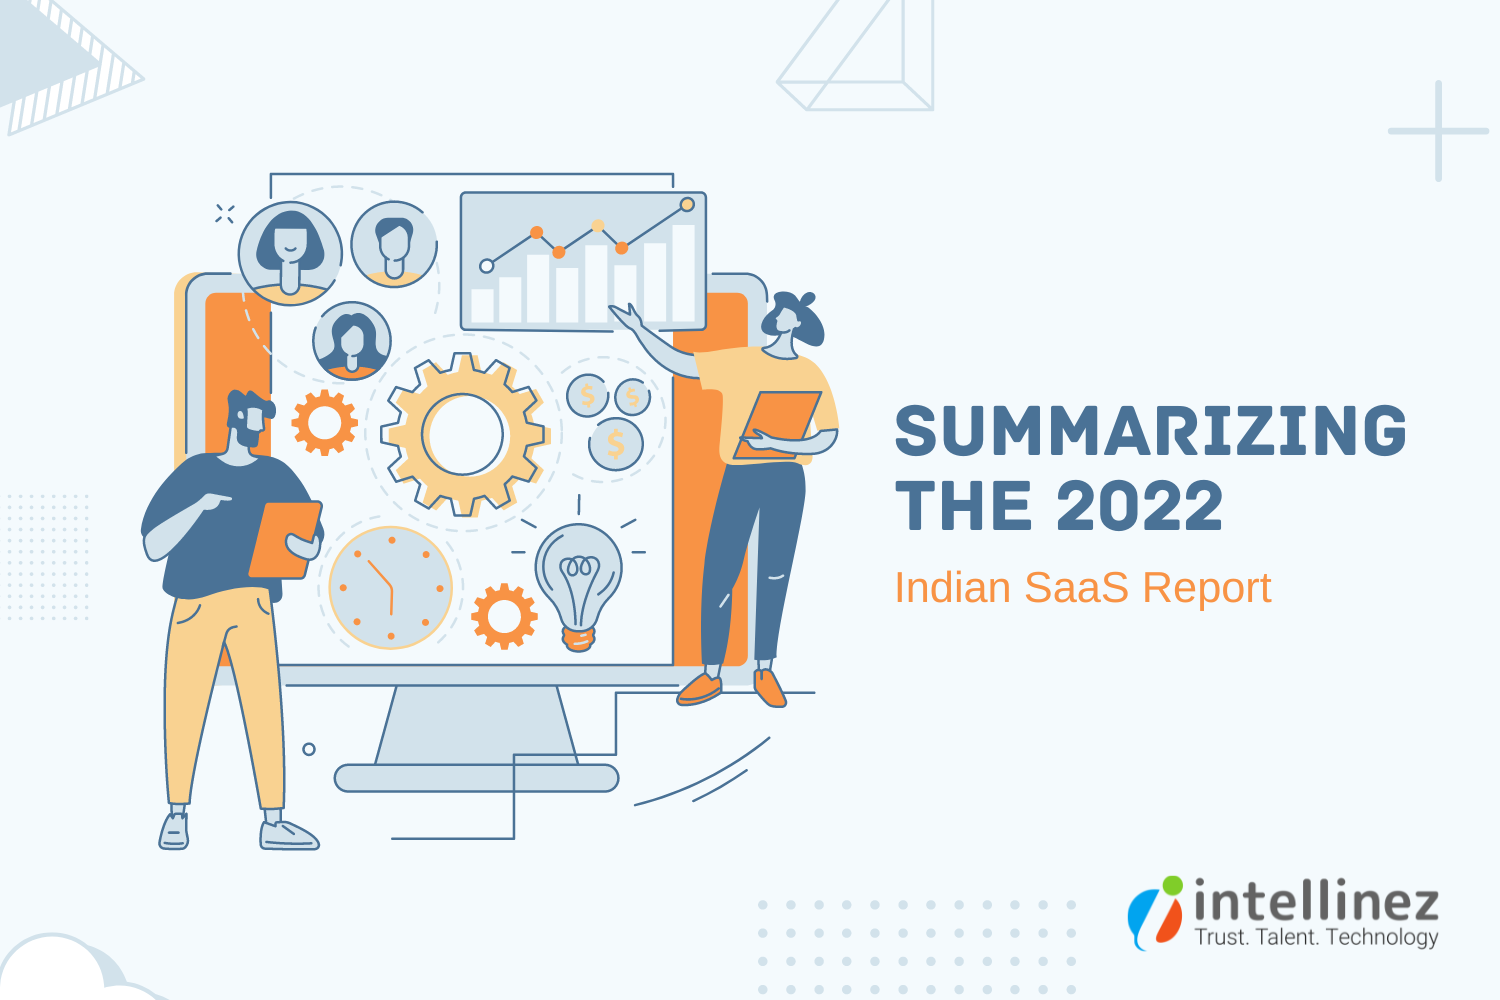 Summarizing the 2022 Indian SaaS Report